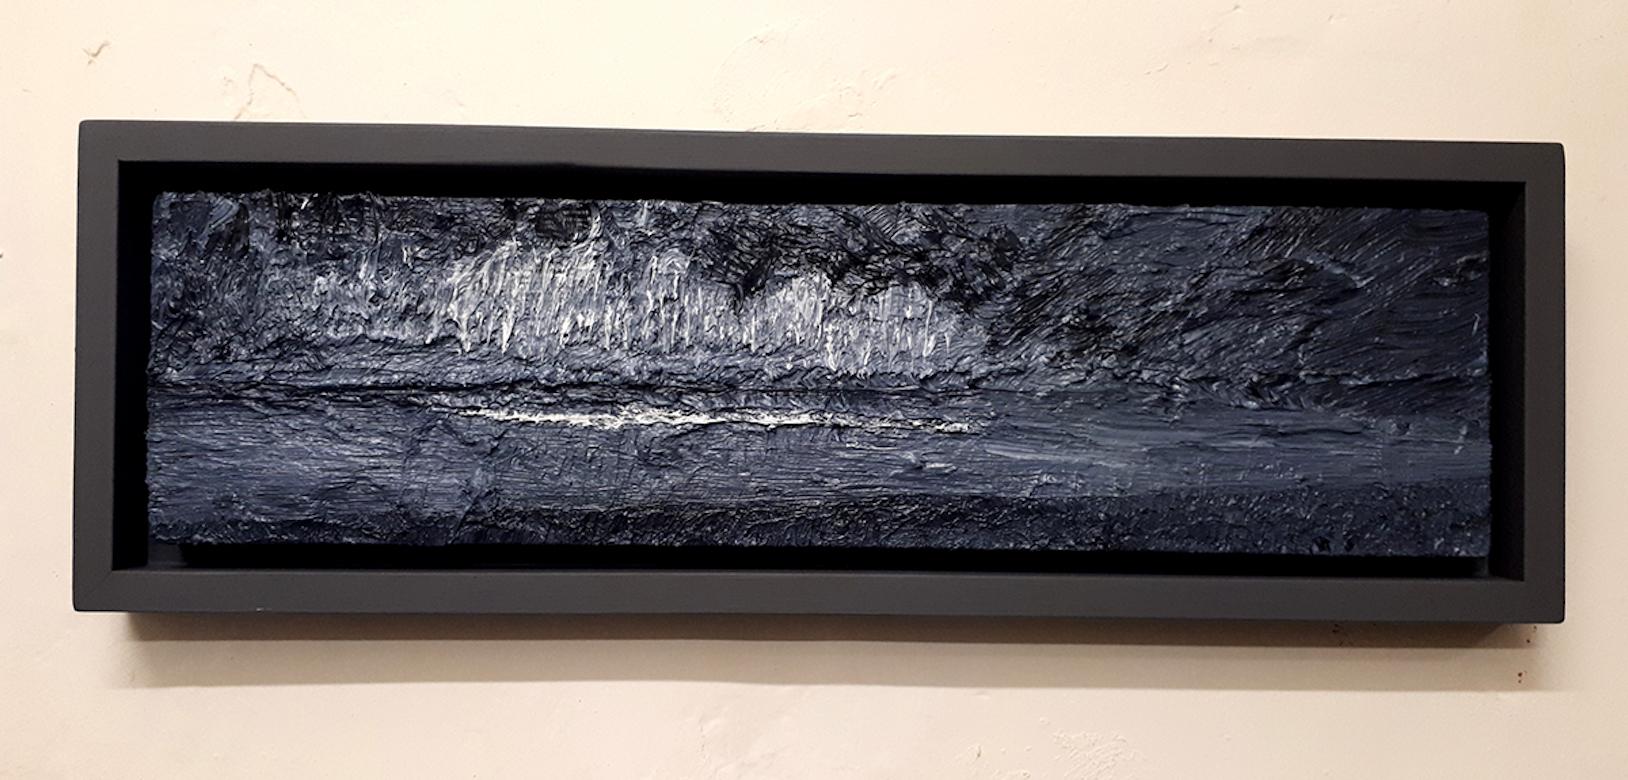 Oil on panel. Framed in contemporary black wood frame. Measures: Image 5